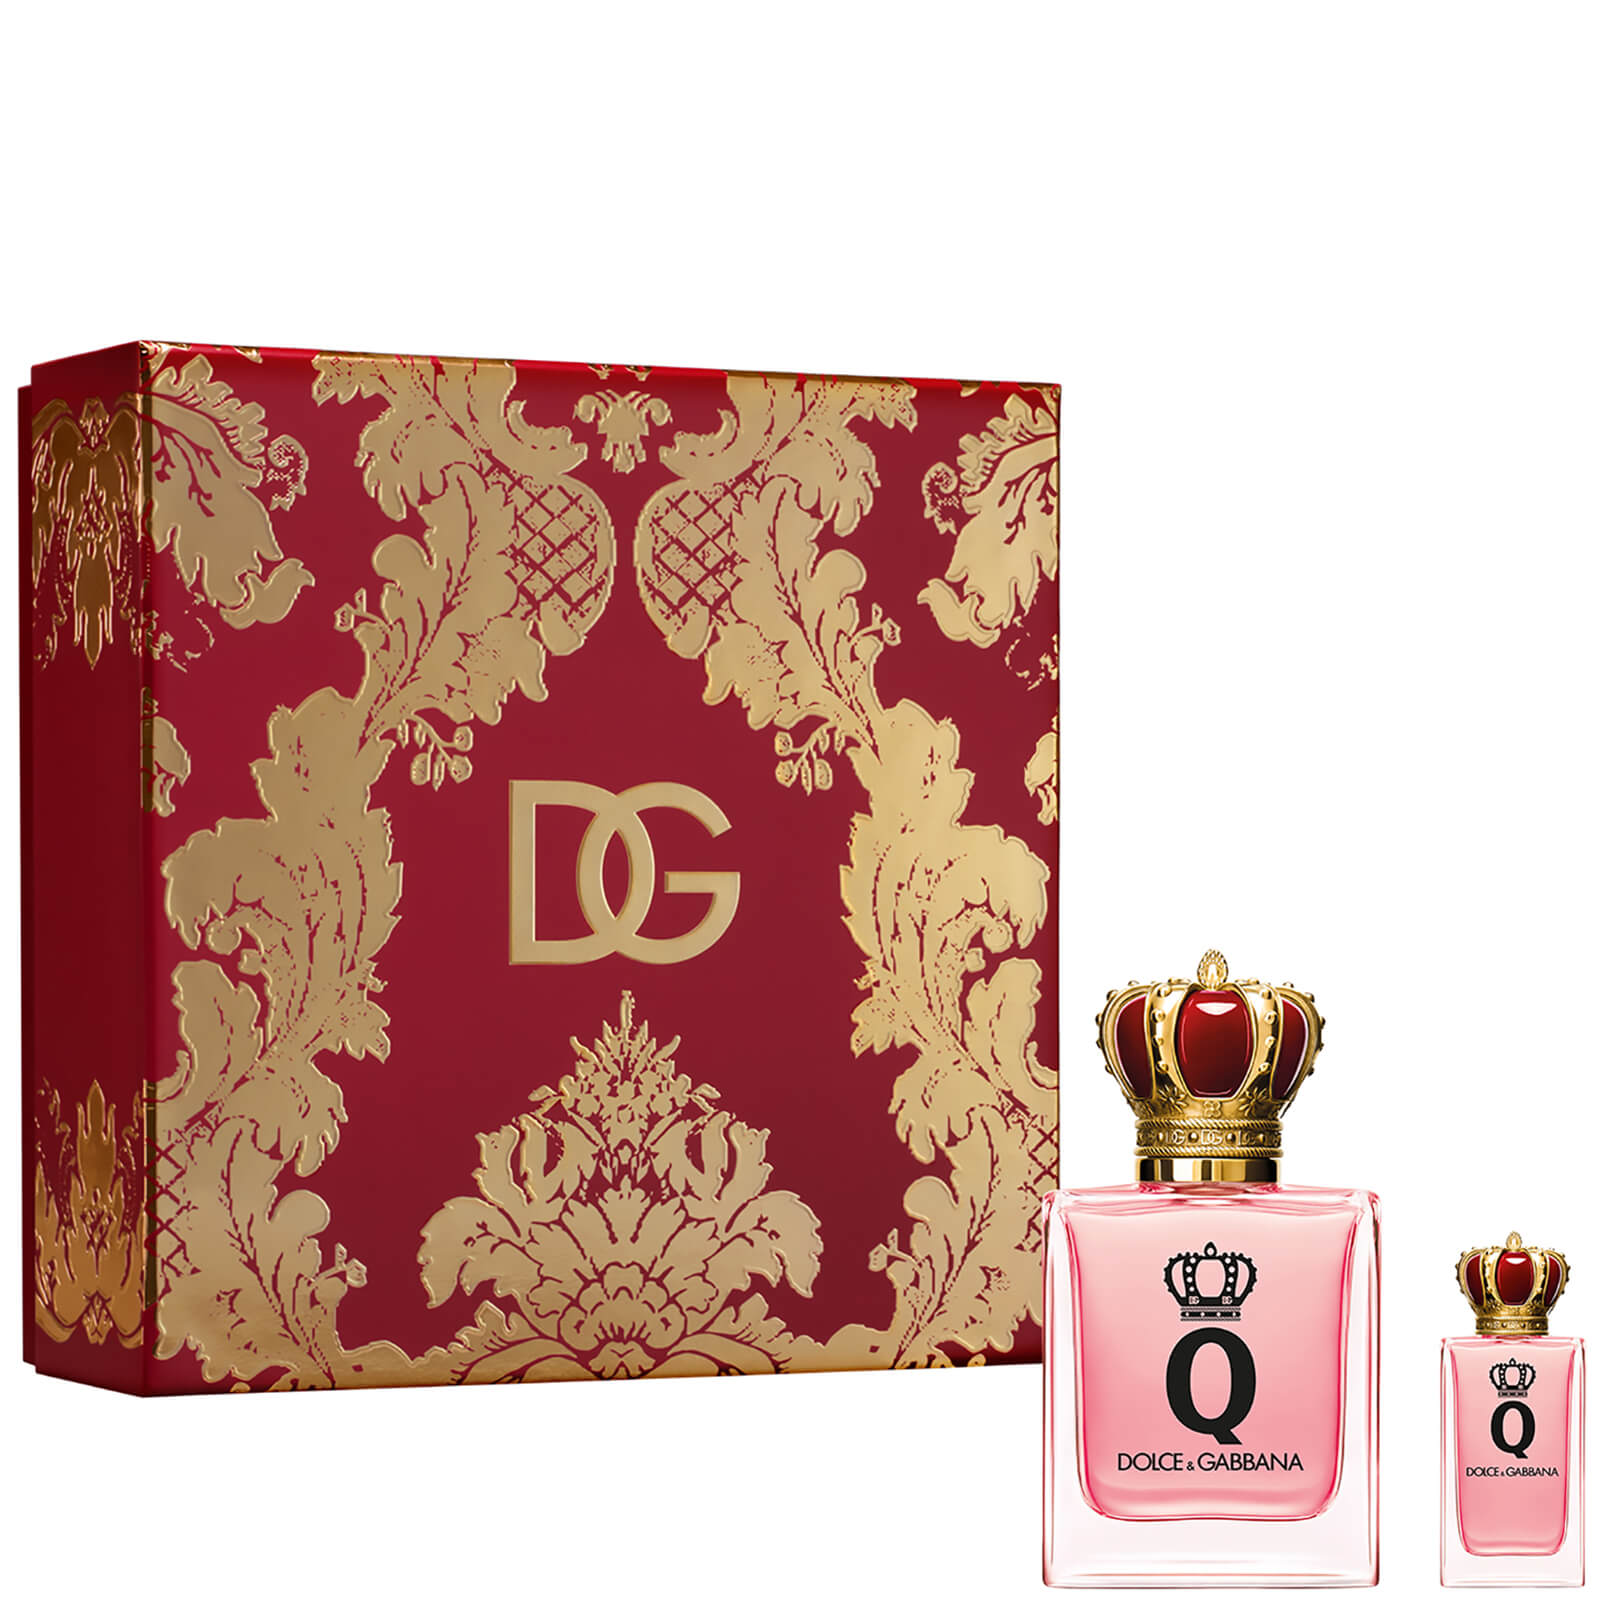 Dolce&Gabbana Q by Dolce&Gabbana Eau de Parfum 50 ml Set